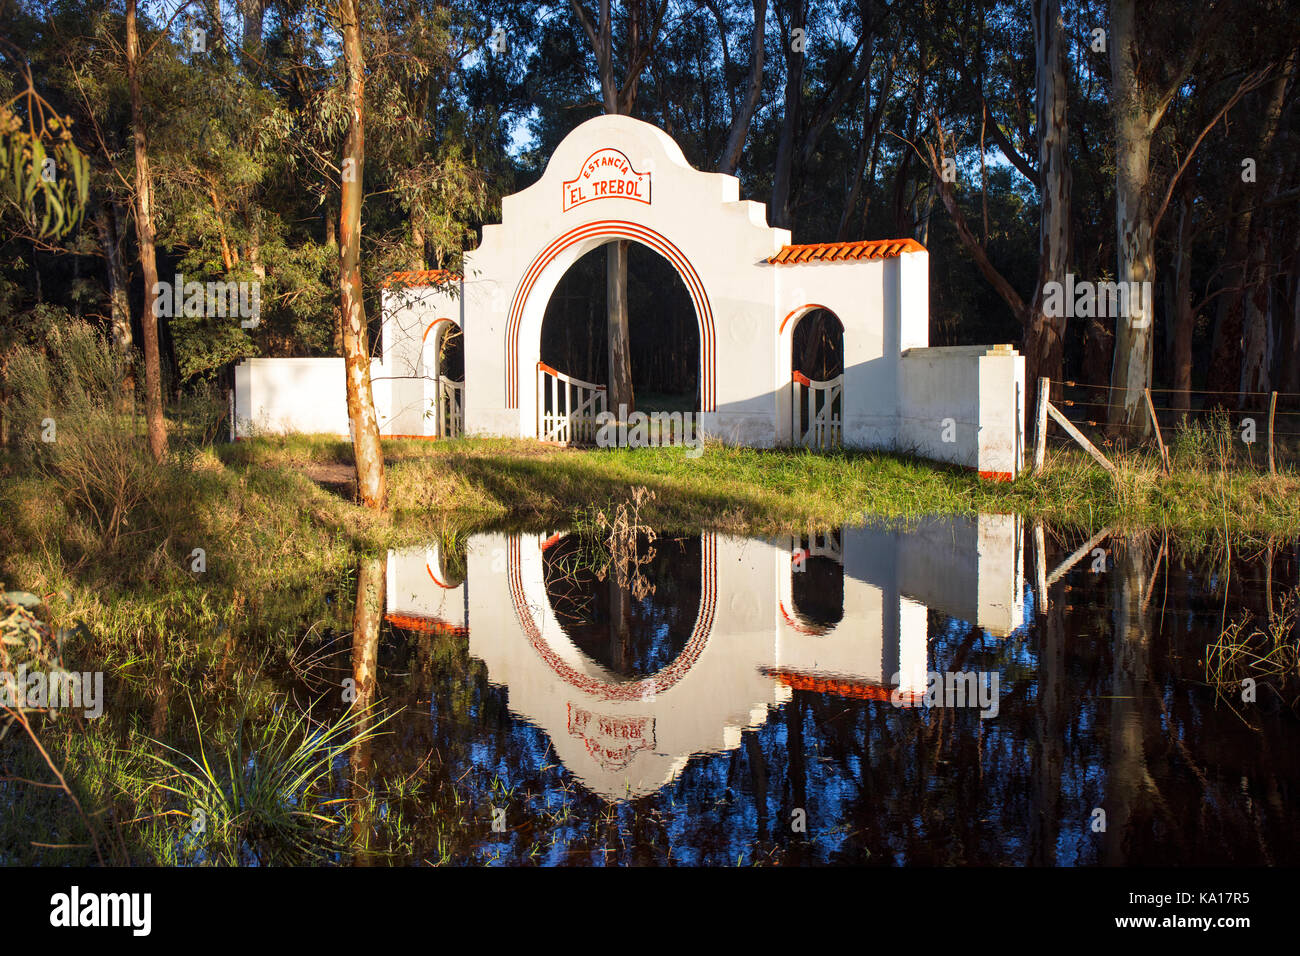 Entrance of a traditional 'Estancia'. Las Flores, Argentina. Stock Photo